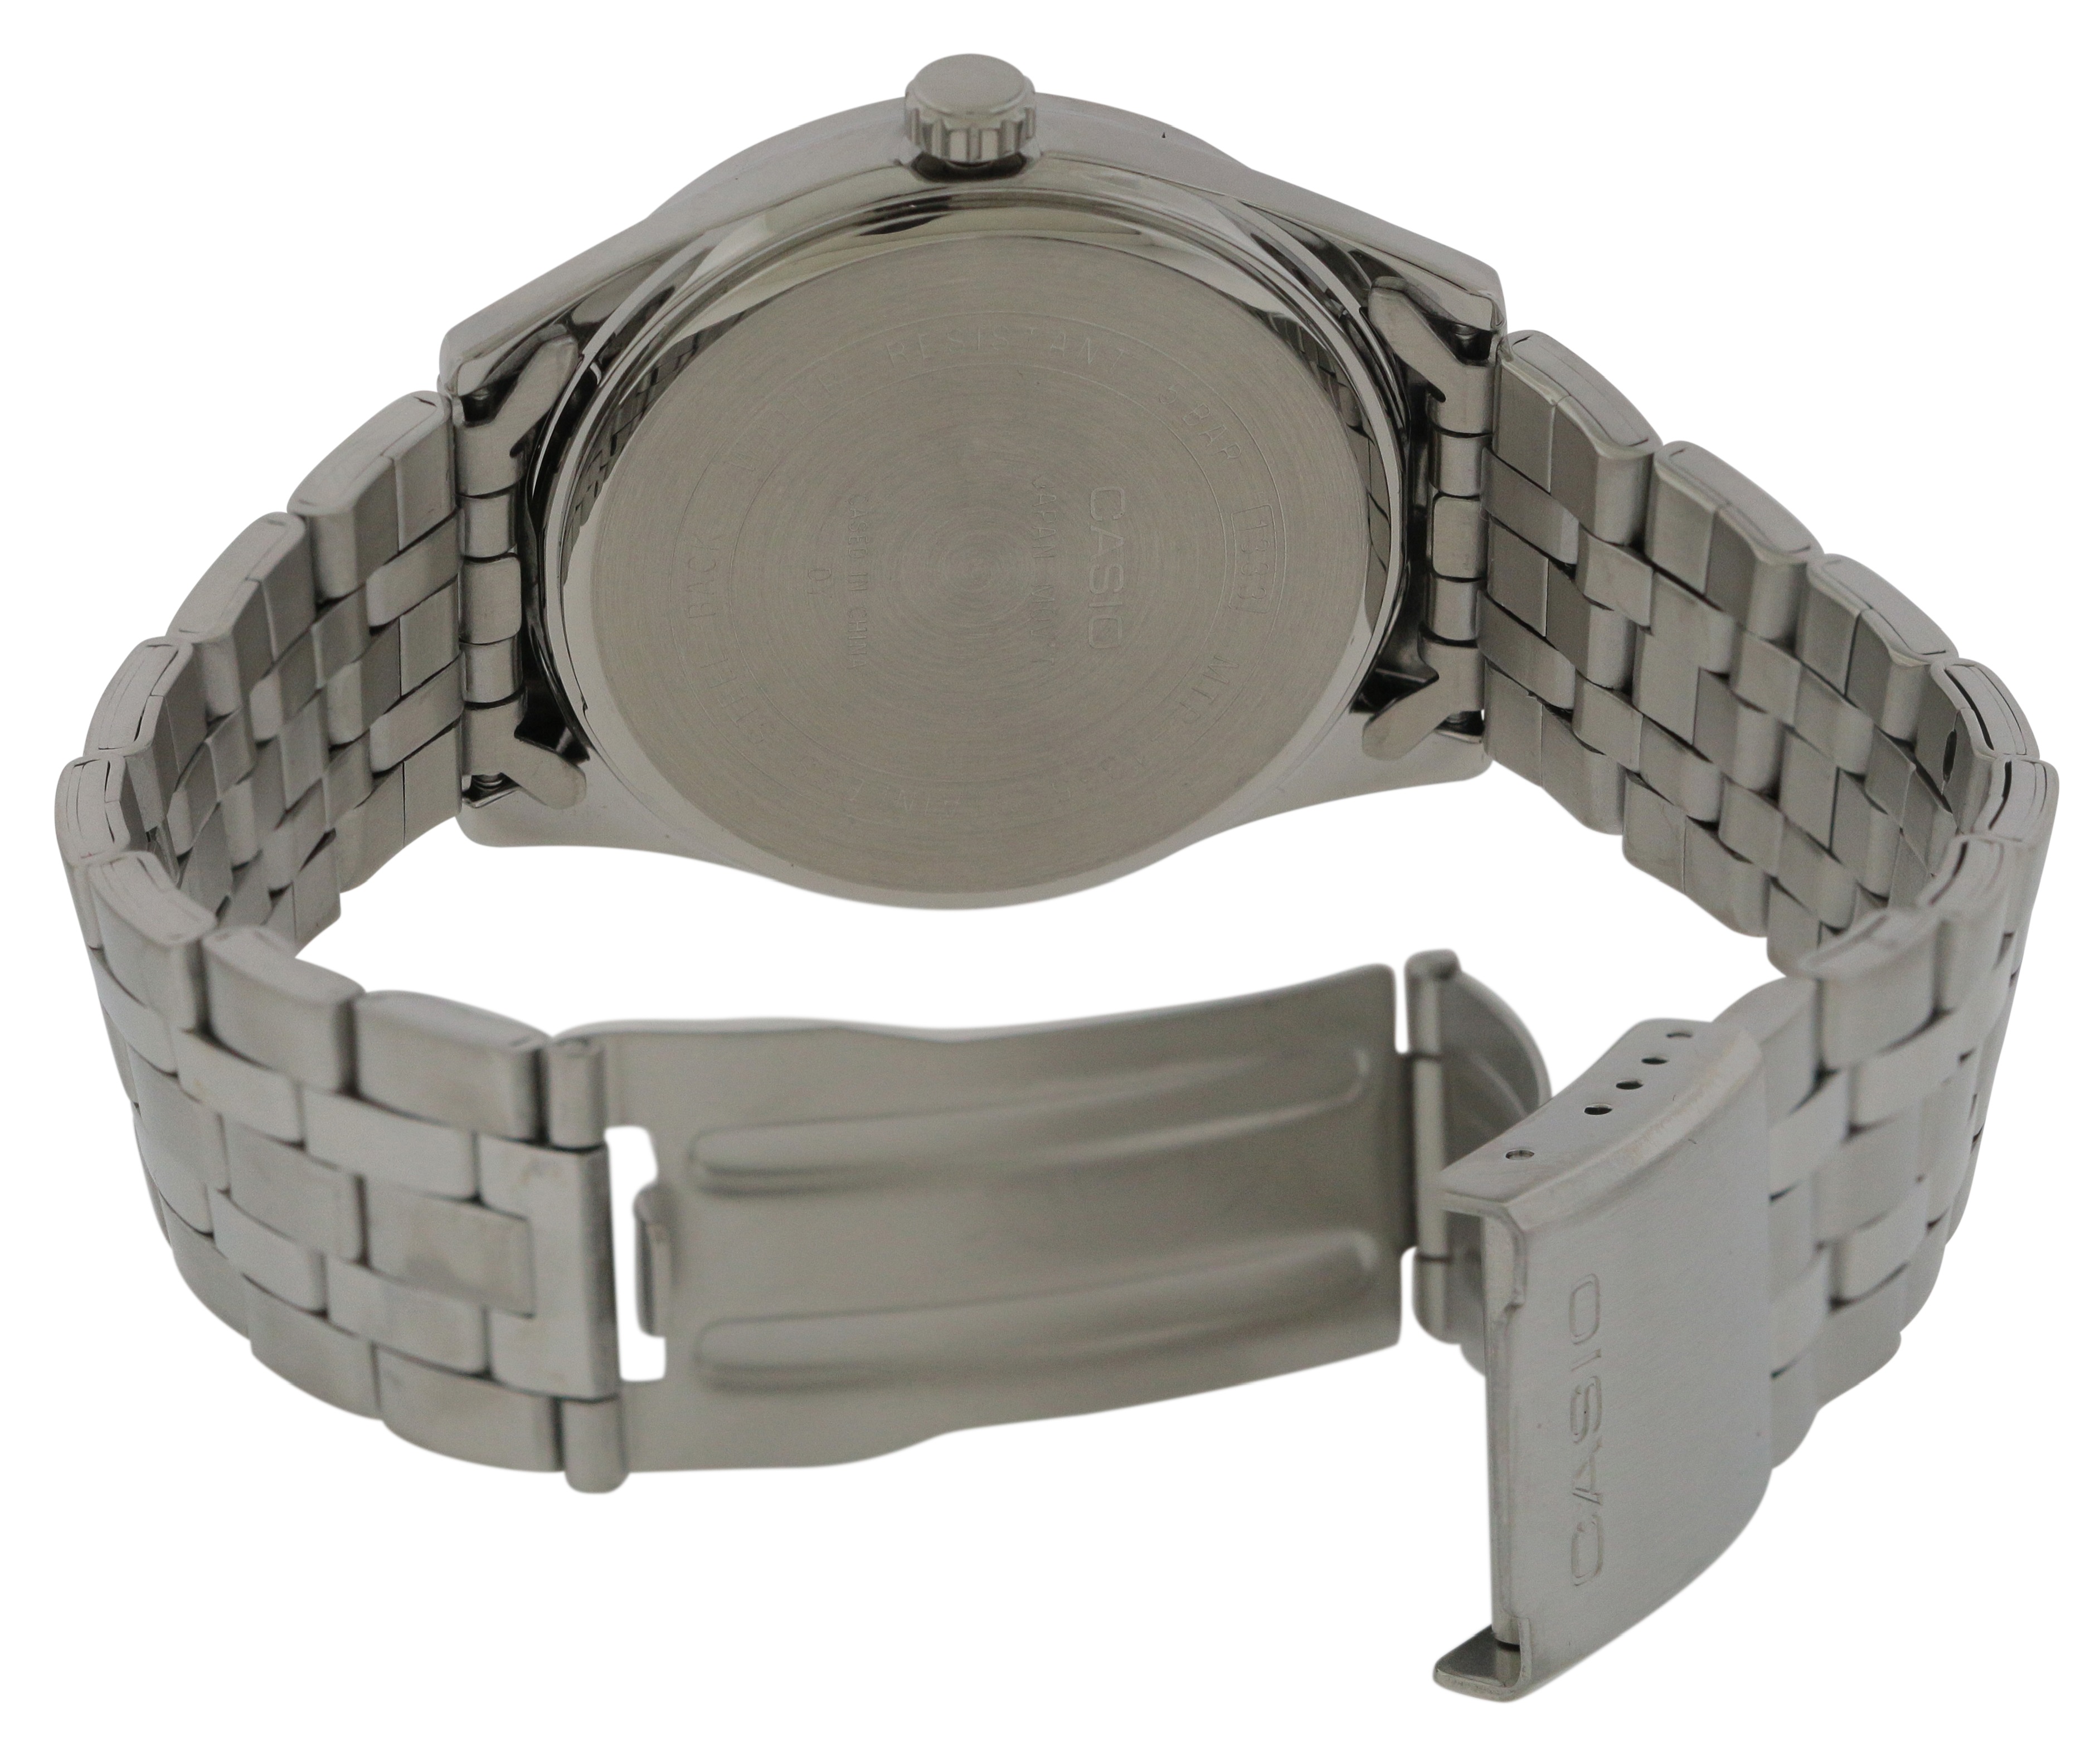 Casio Stainless Steel Mens Watch MTP1335D-2AVDF | eBay